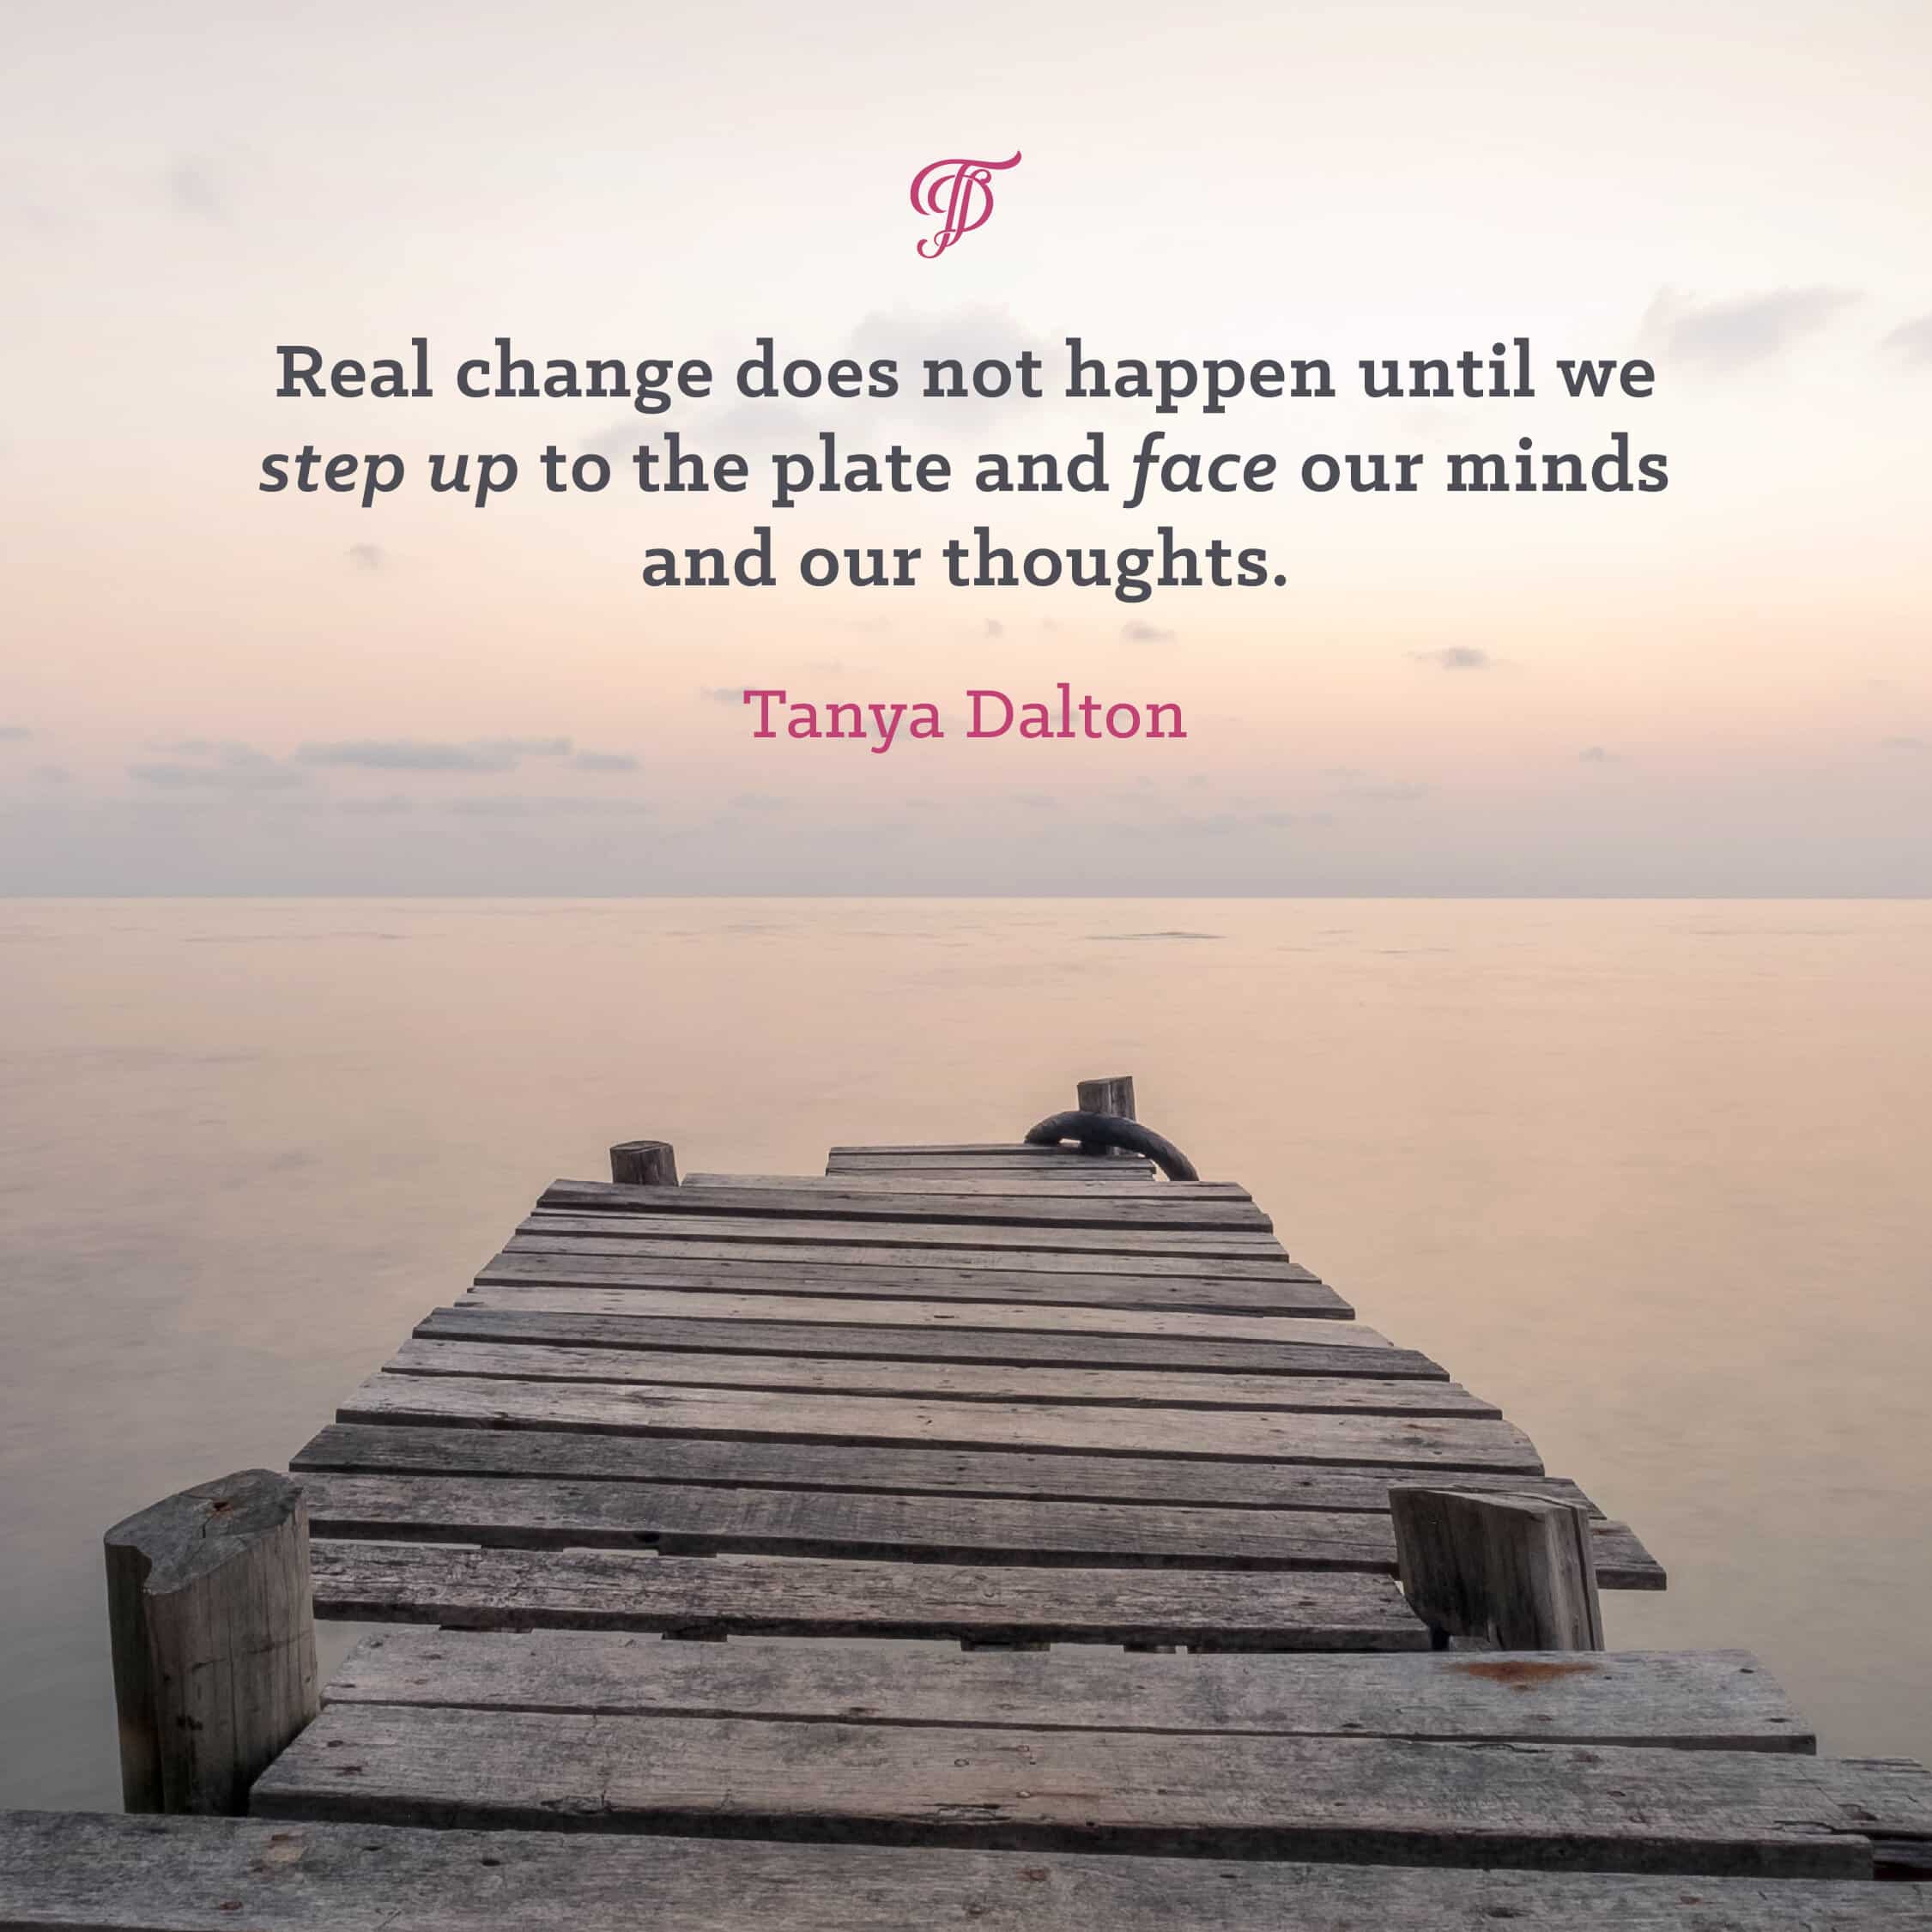 Tanya Dalton quote on change